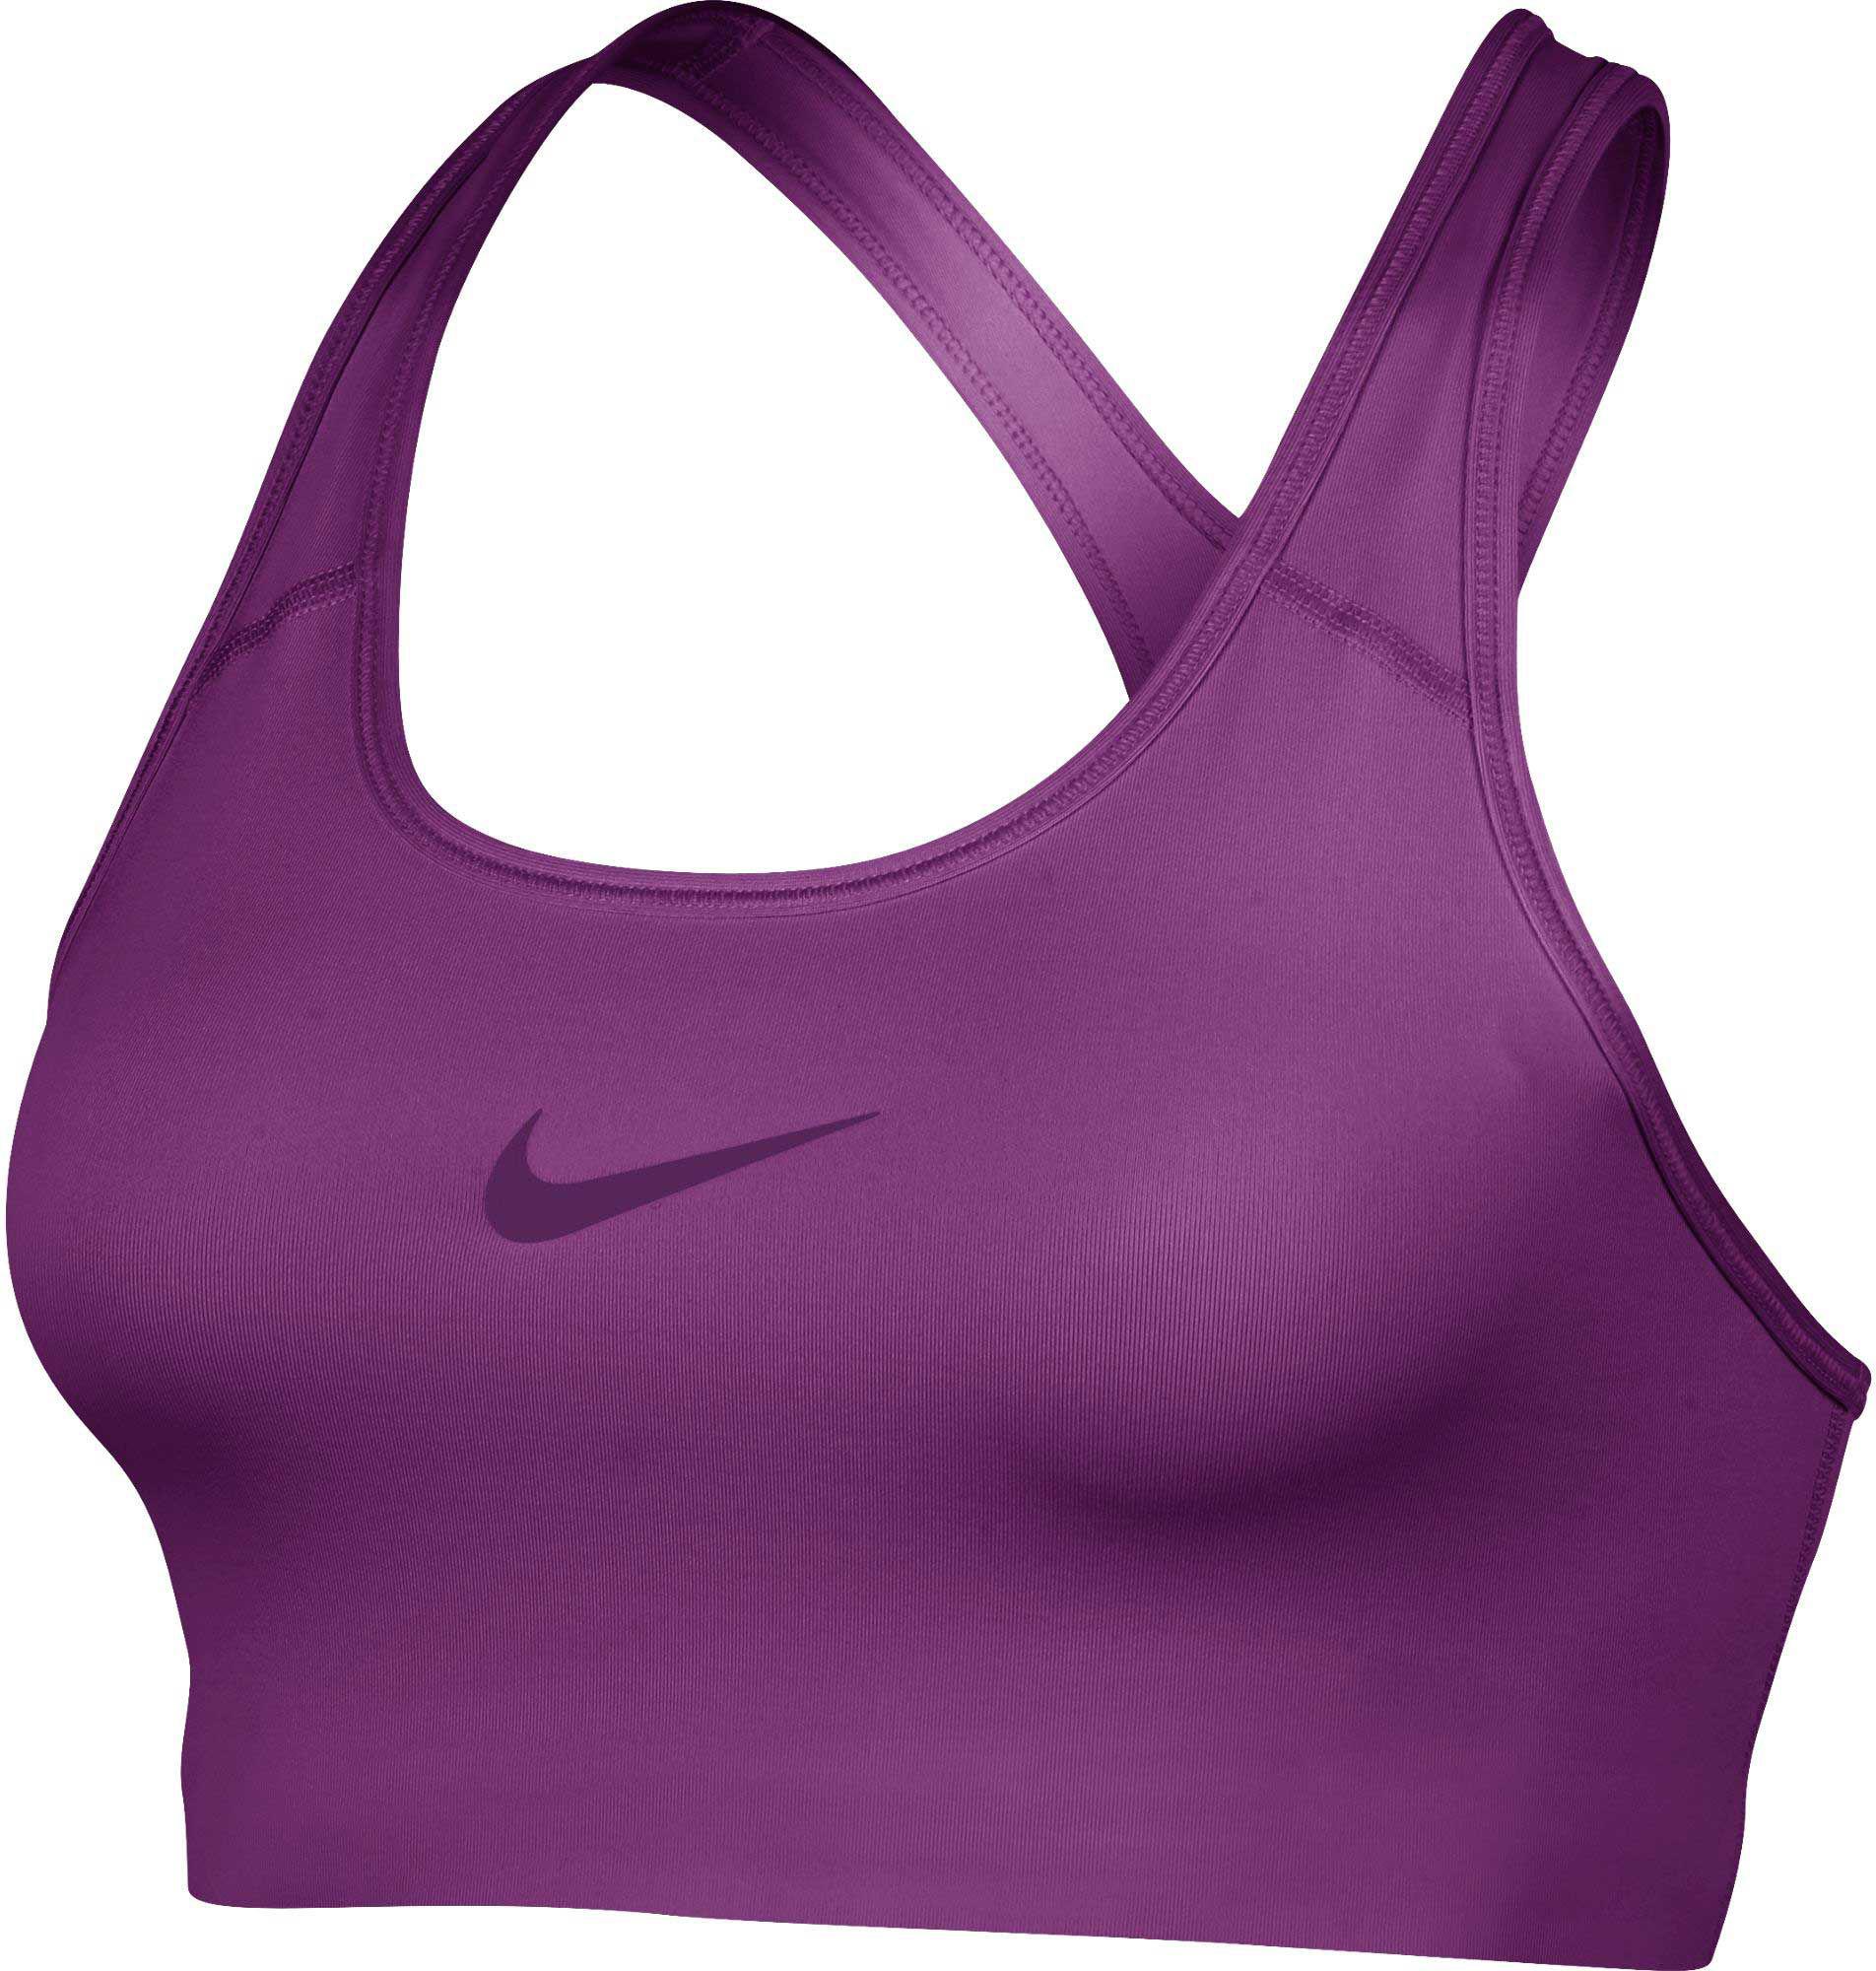 Nike Pro Classic Swoosh Compression Sports Bra in Purple - Lyst